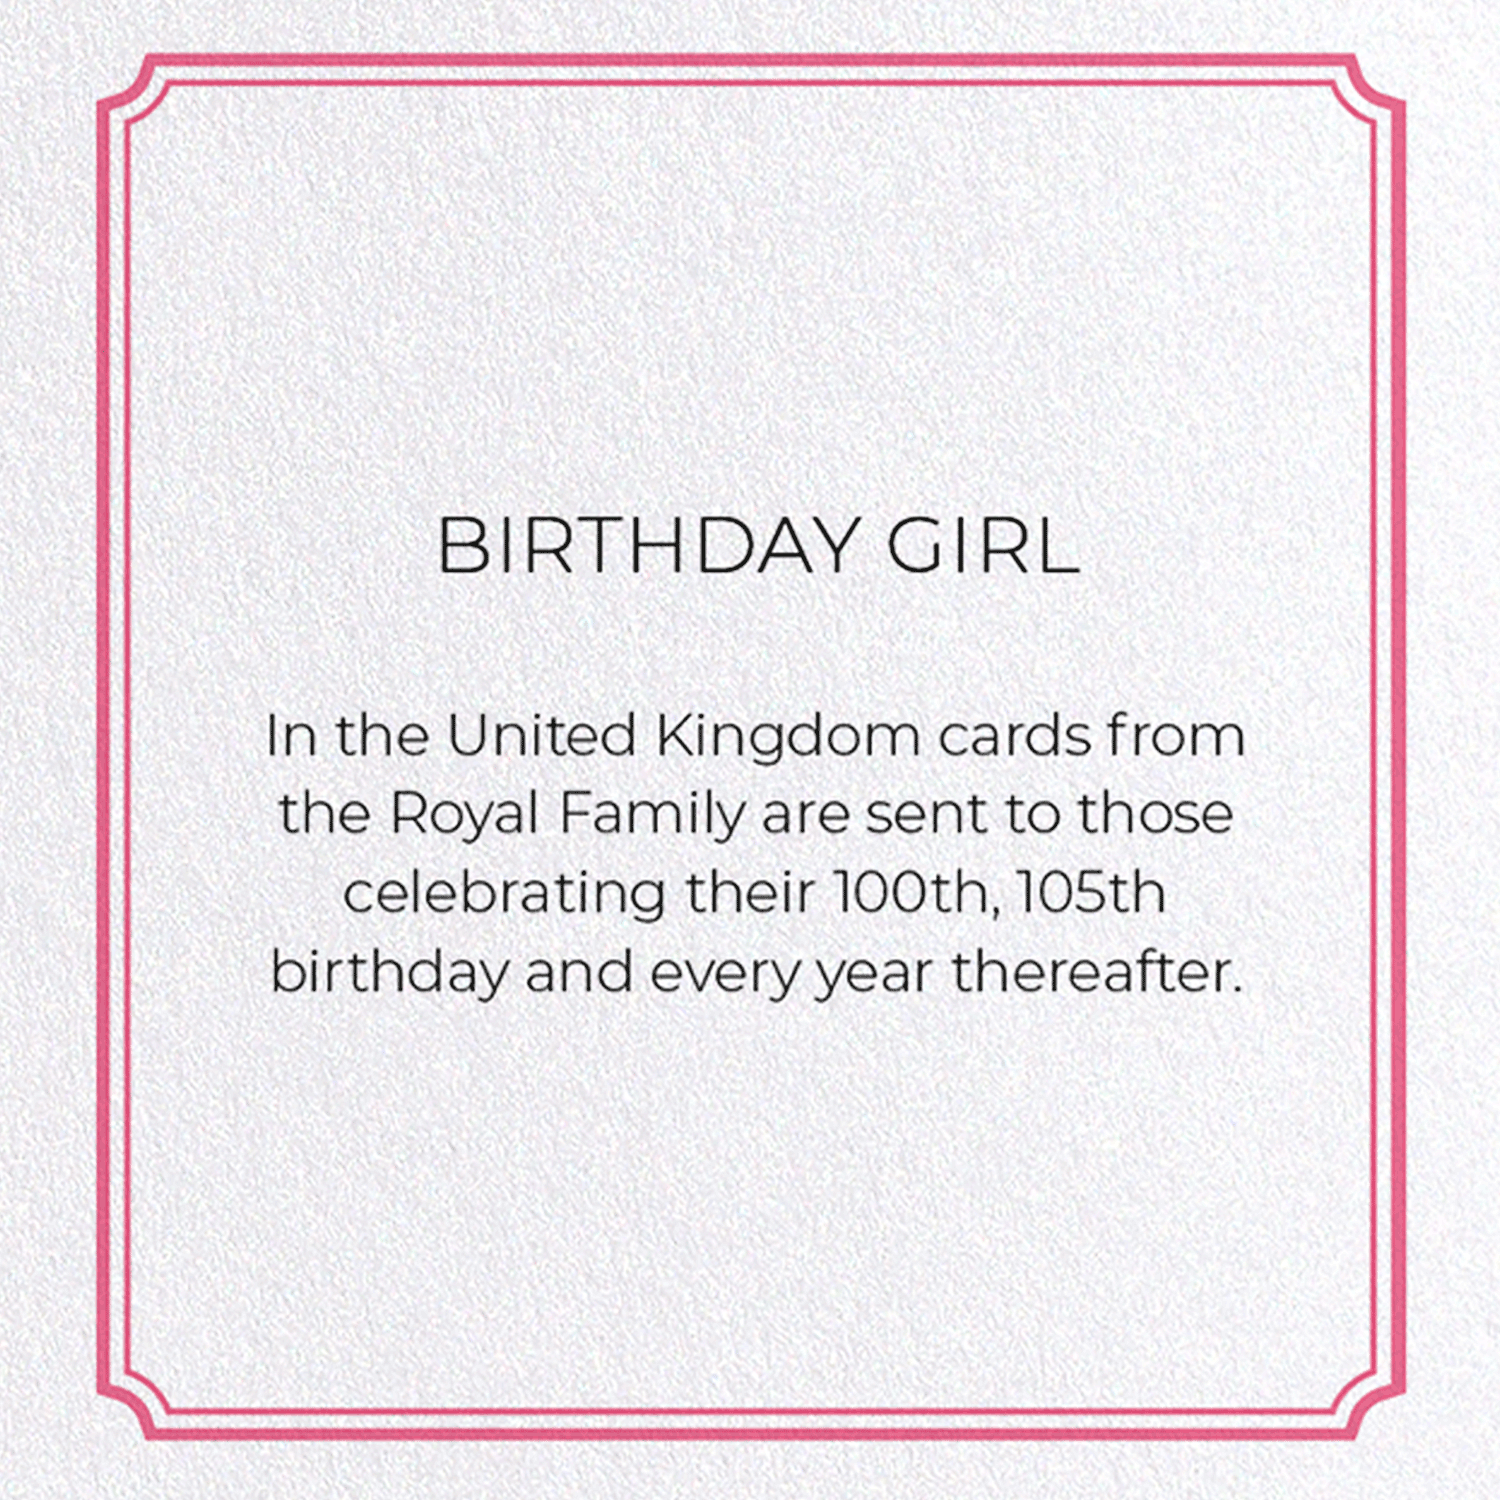 BIRTHDAY GIRL: Vintage Greeting Card